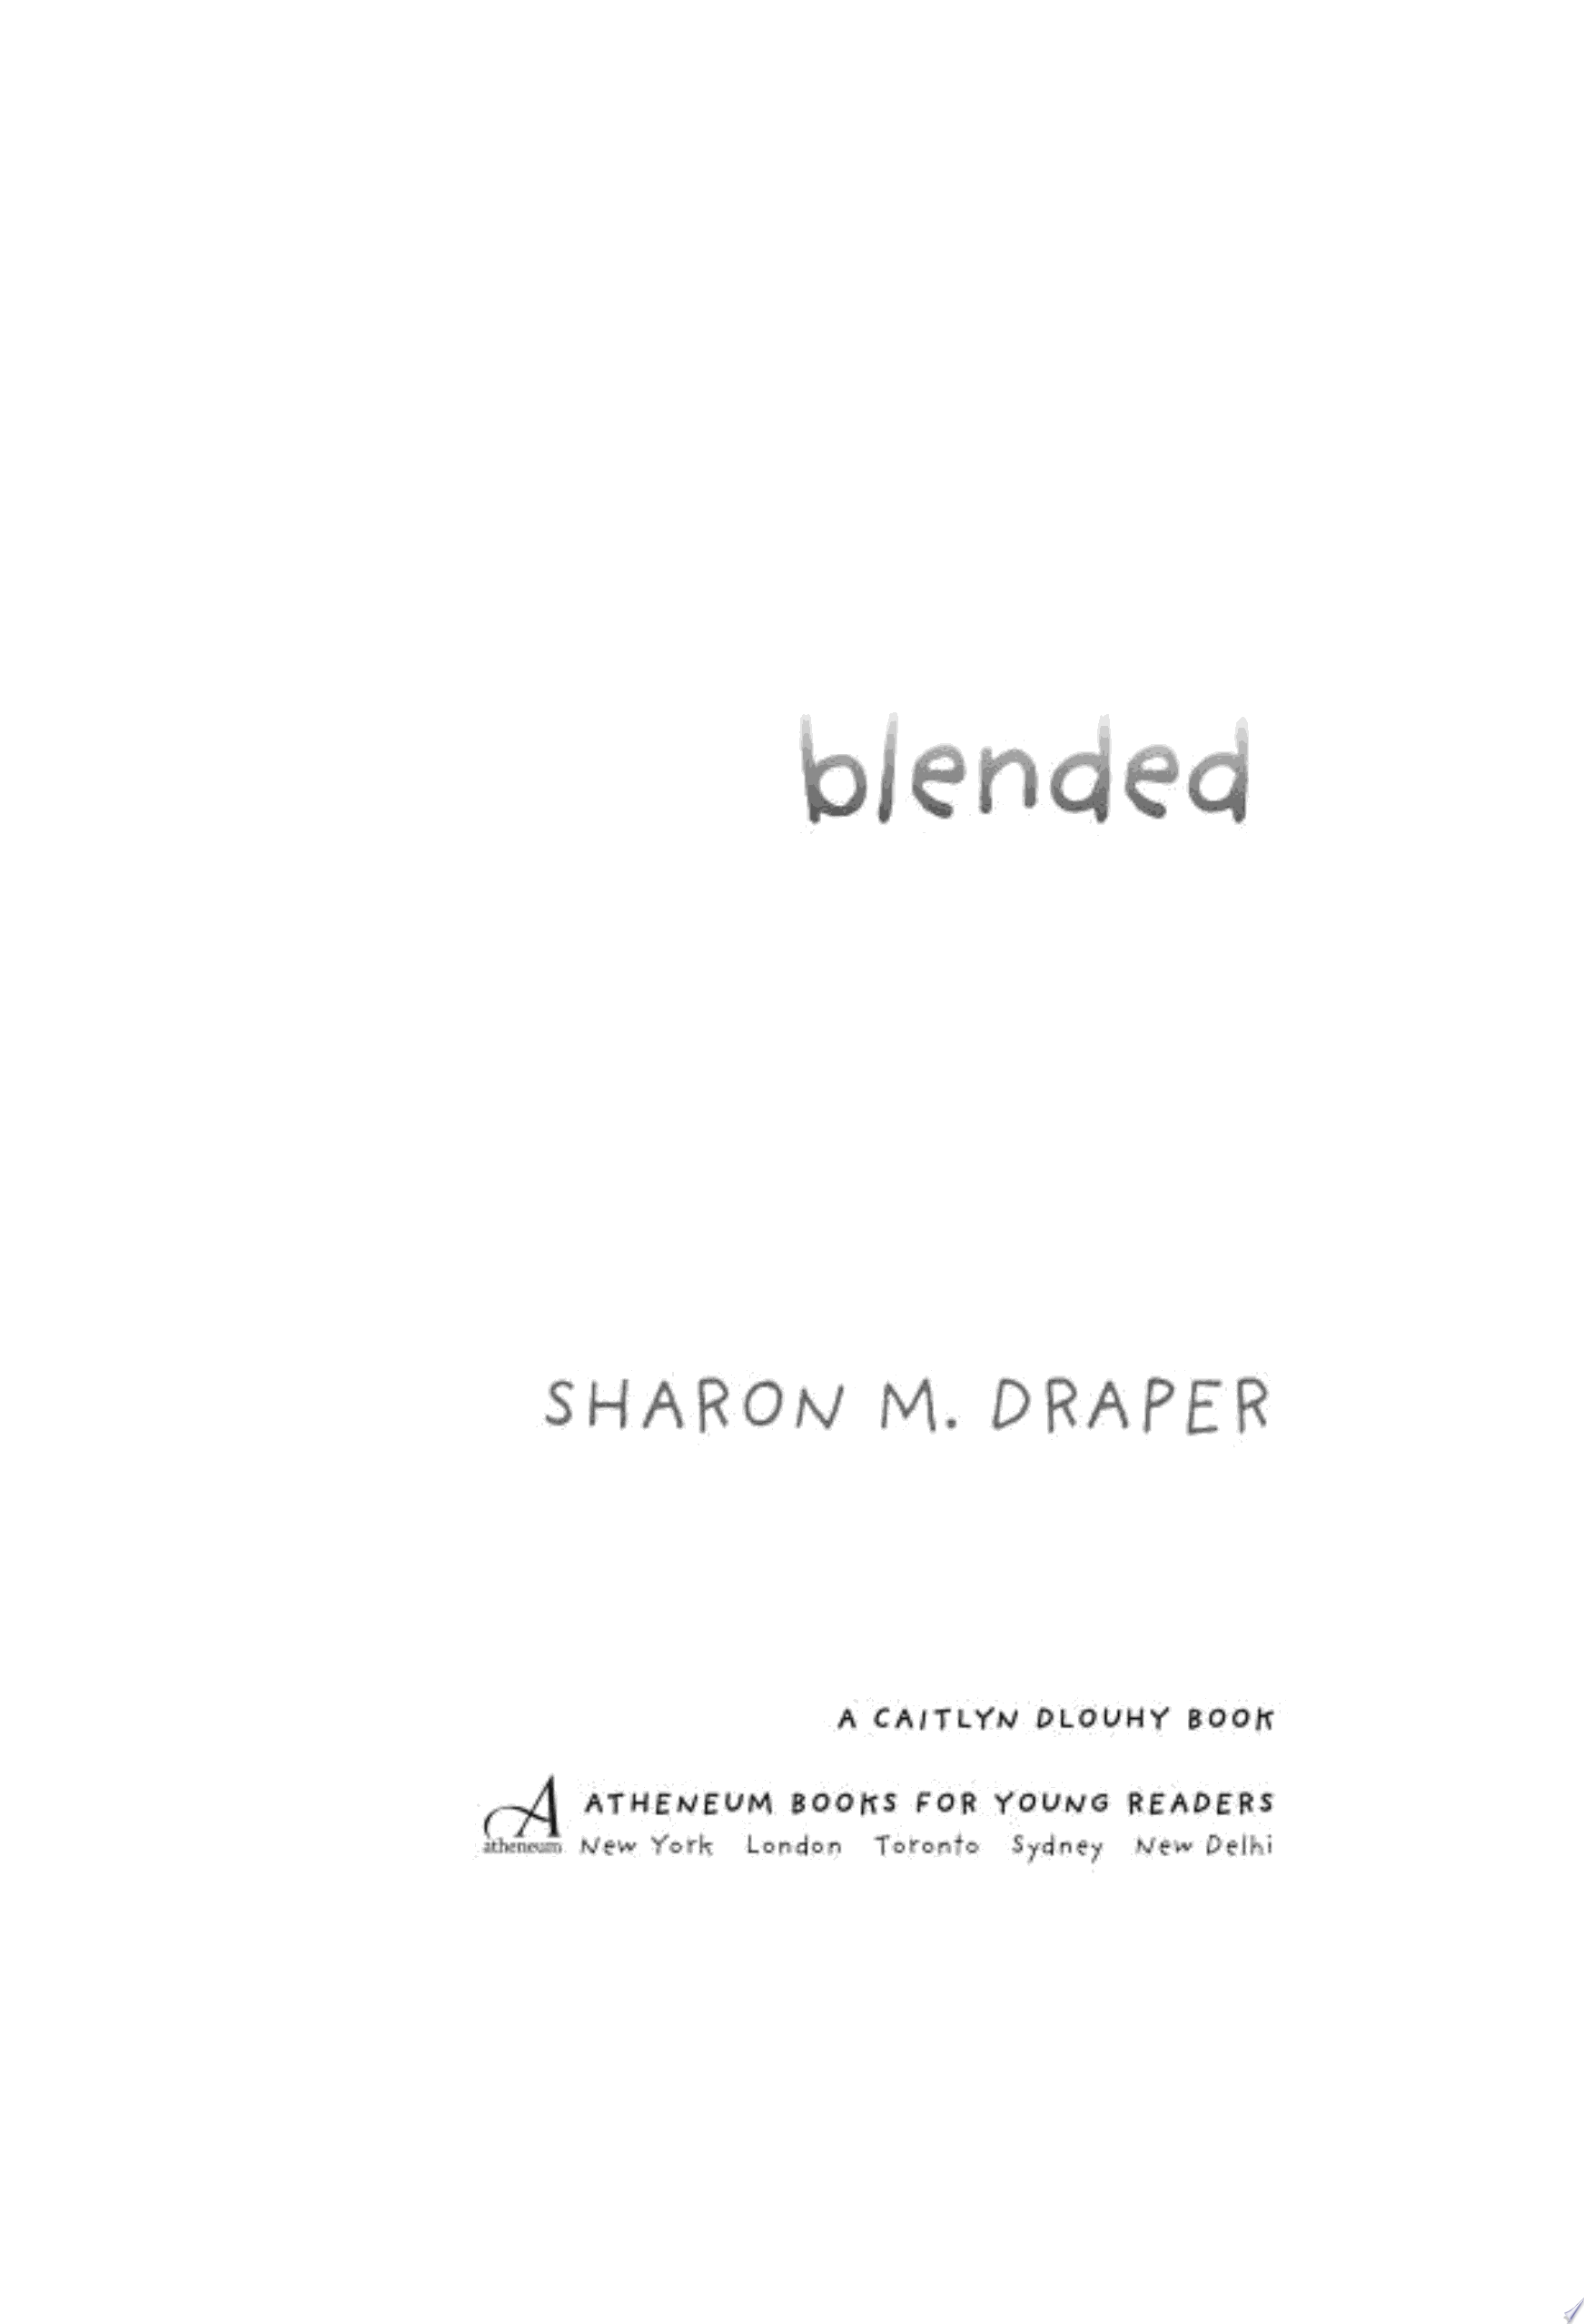 Image for "Blended"